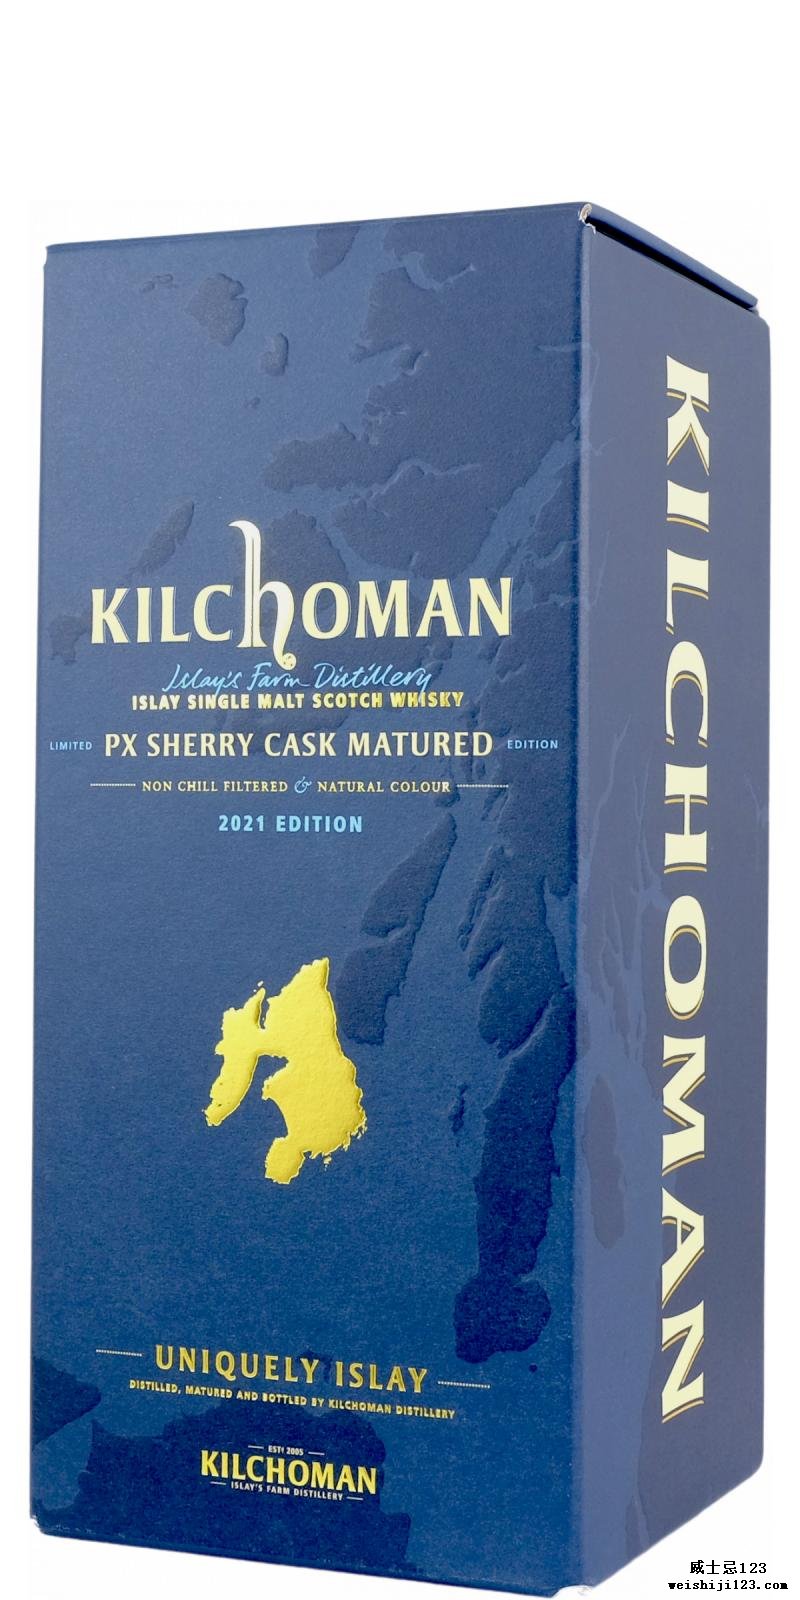 Kilchoman PX Sherry Cask Matured